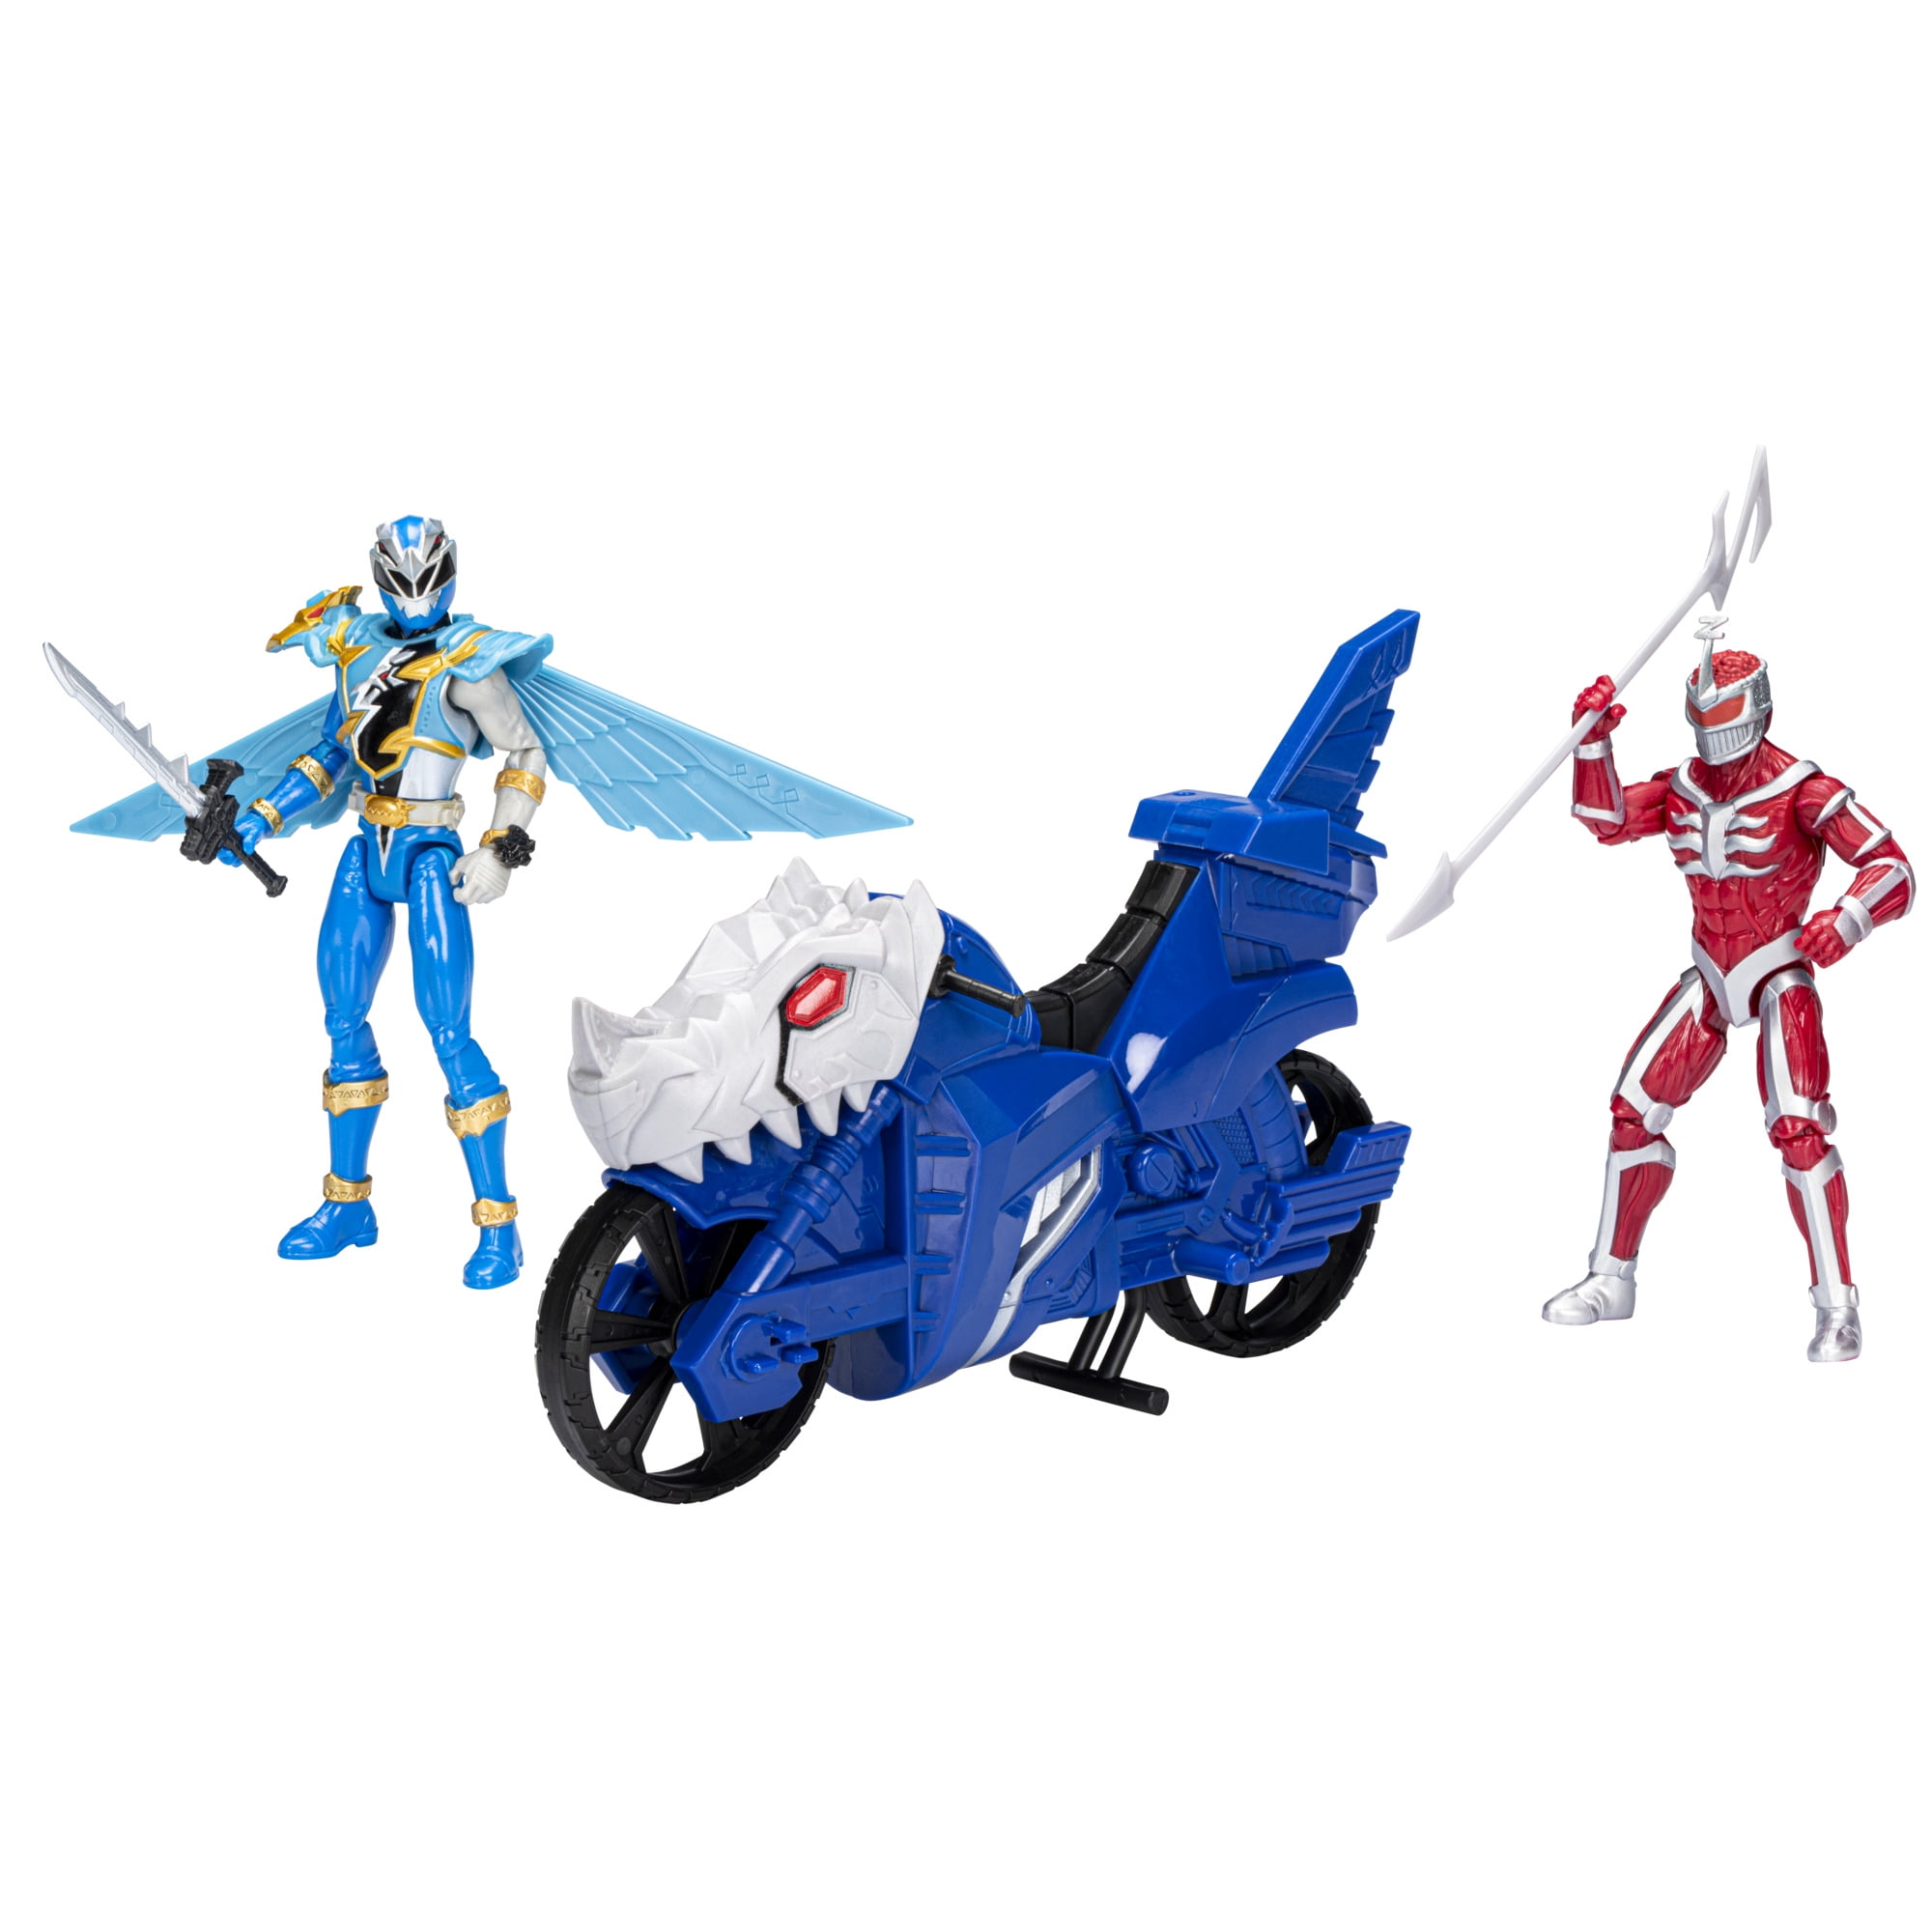 komfort Bytte Pjece Power Rangers Dino Fury Face-Off Pack Blue Ranger and Vehicle vs Lord Zedd  2-Pack Action Figure - Walmart.com